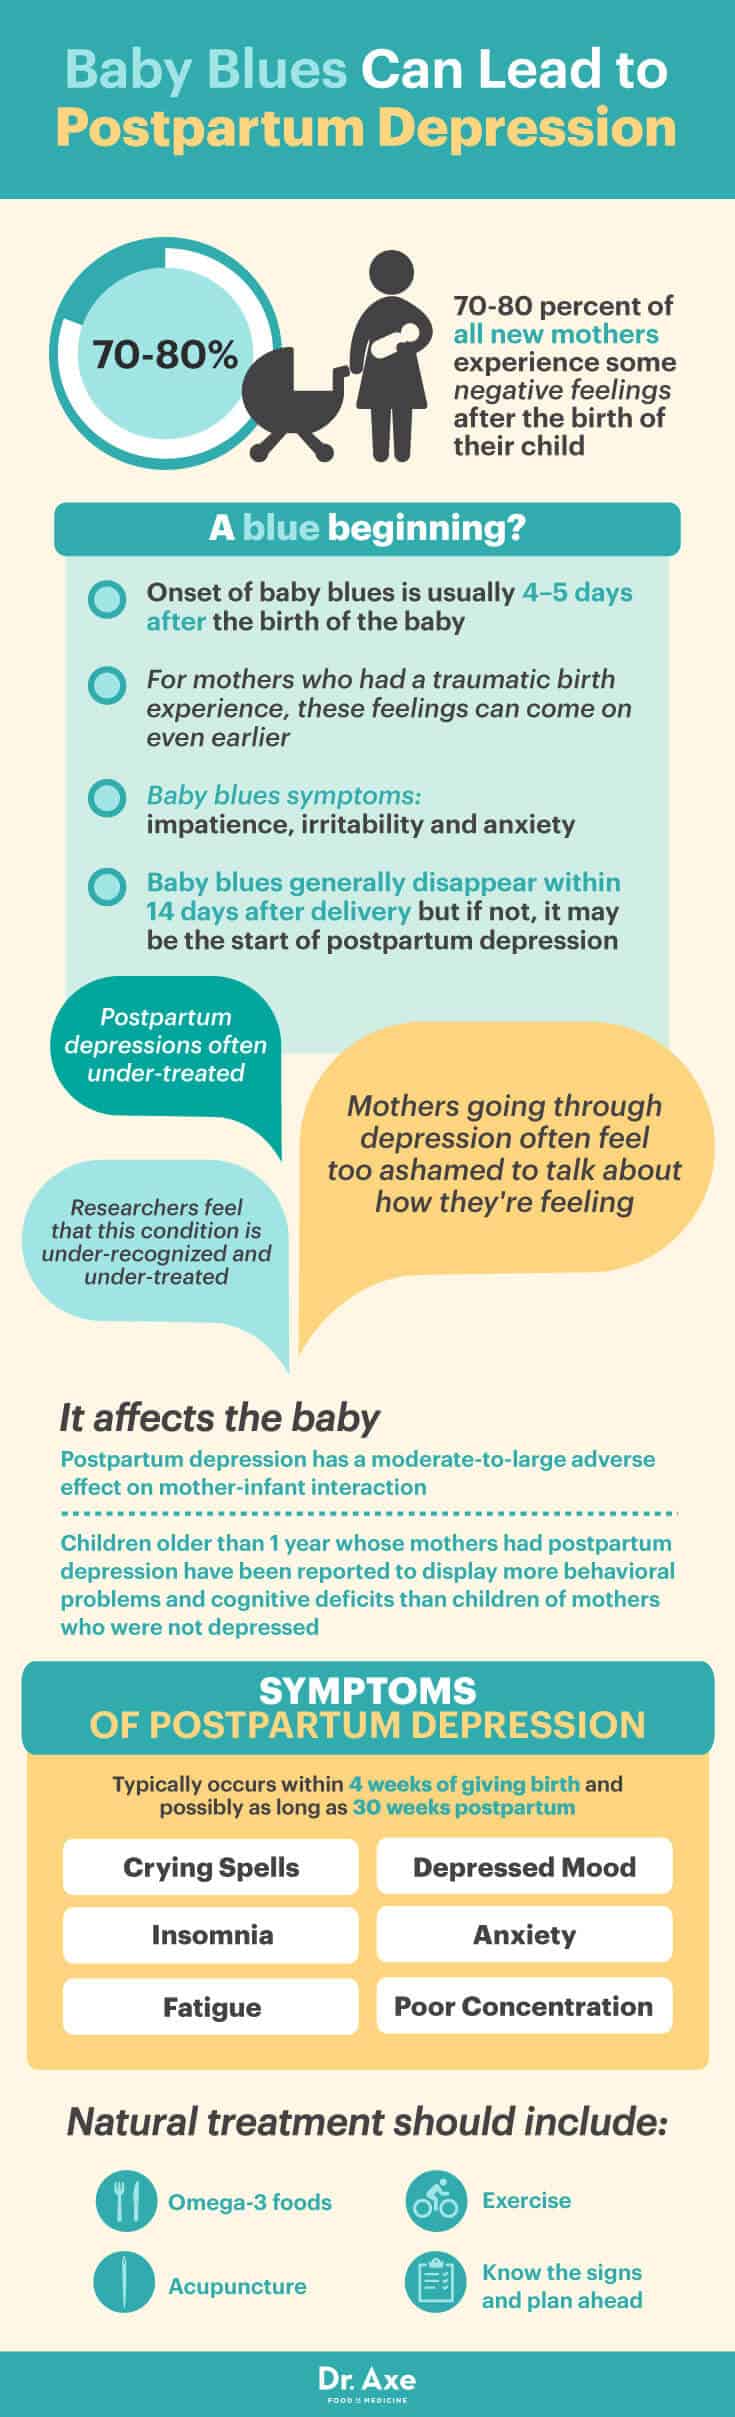 Postpartum depression symptoms - Dr. Axe